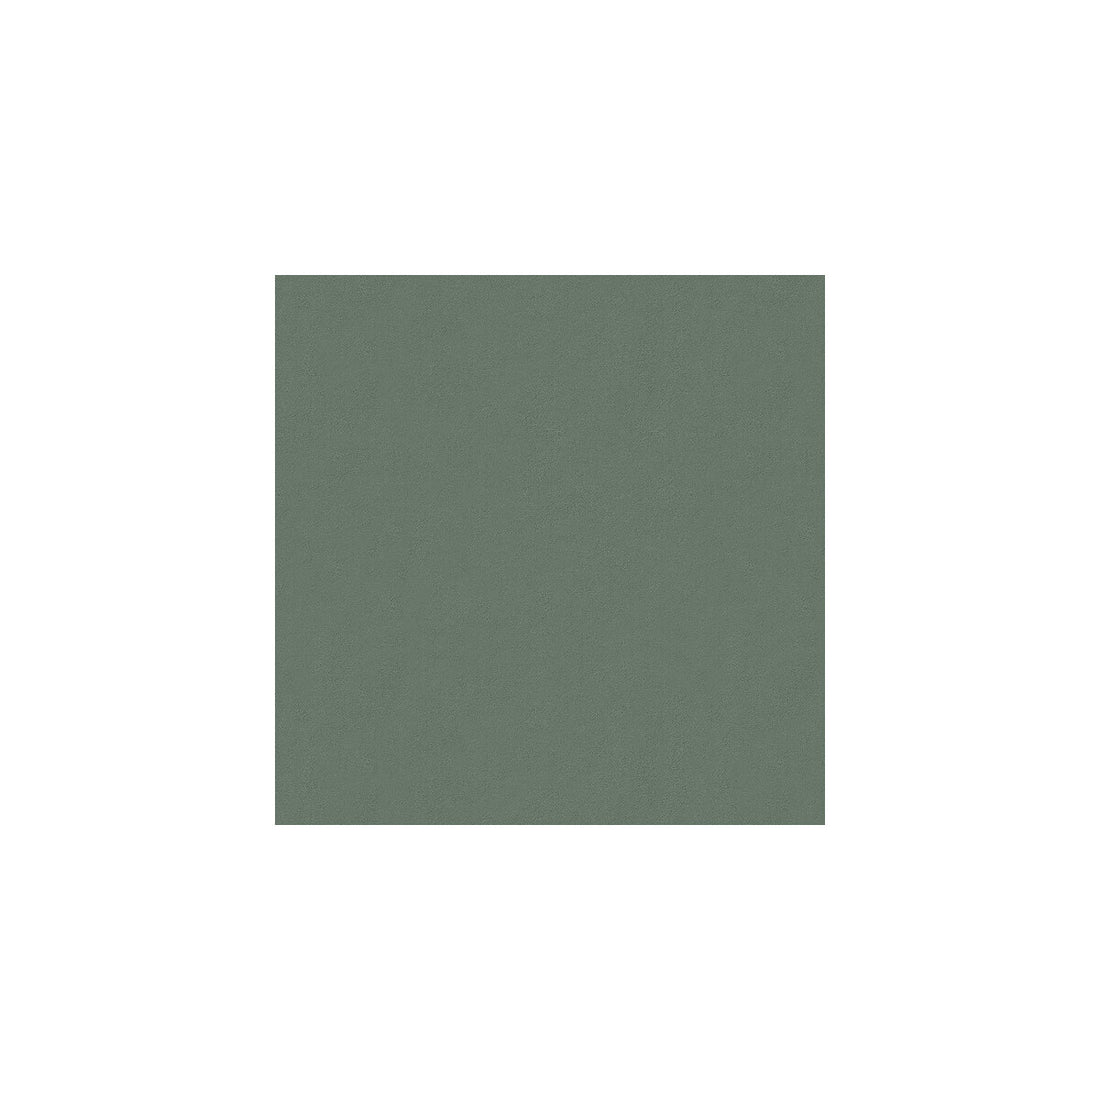 Ultrasuede fabric in jade color - pattern ULTRASUEDE.323.0 - by Kravet Design in the Ultrasuede collection